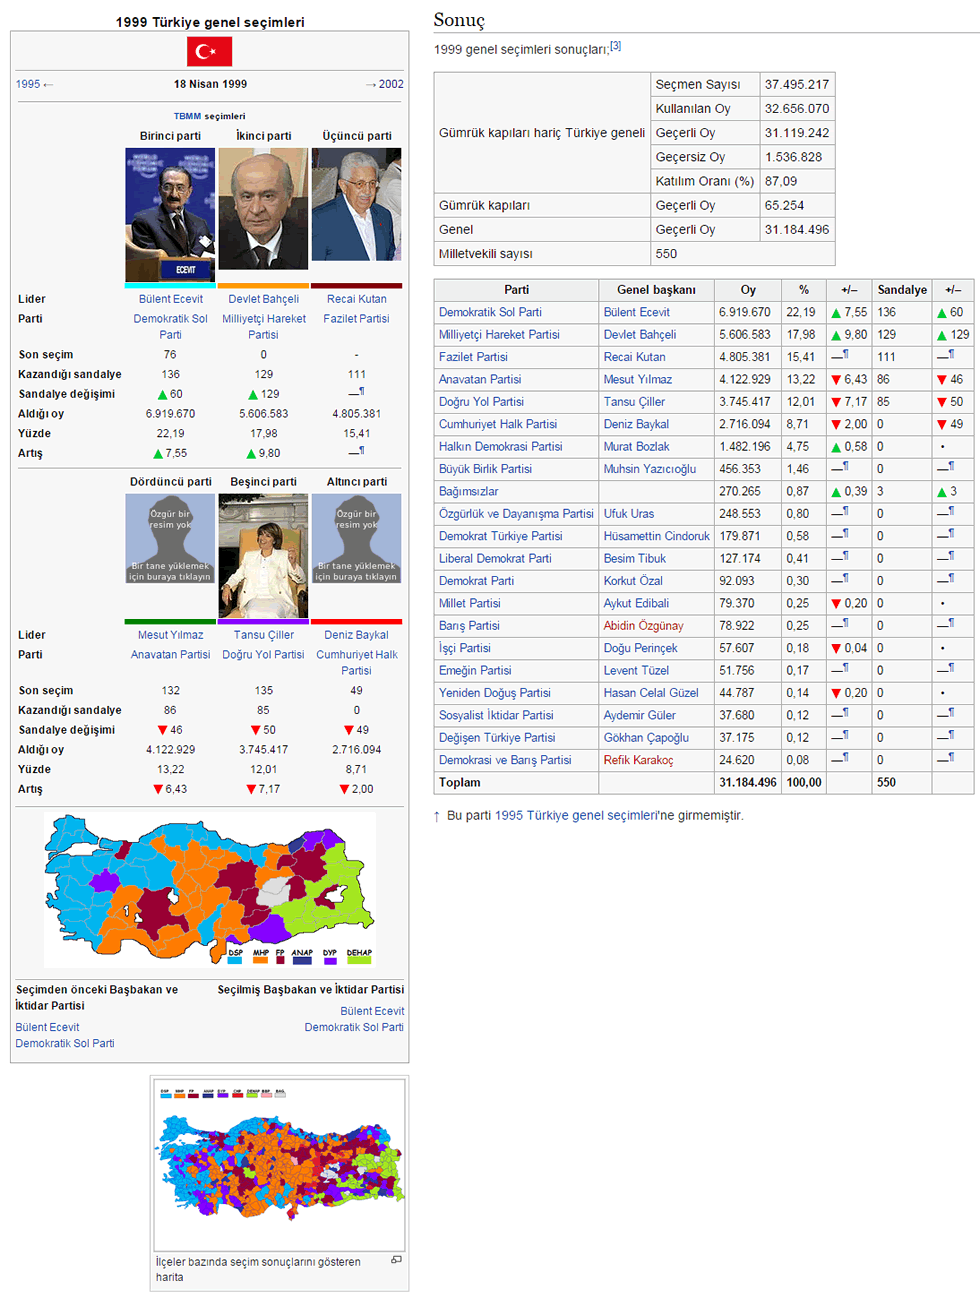 1999 Turquie General Elections